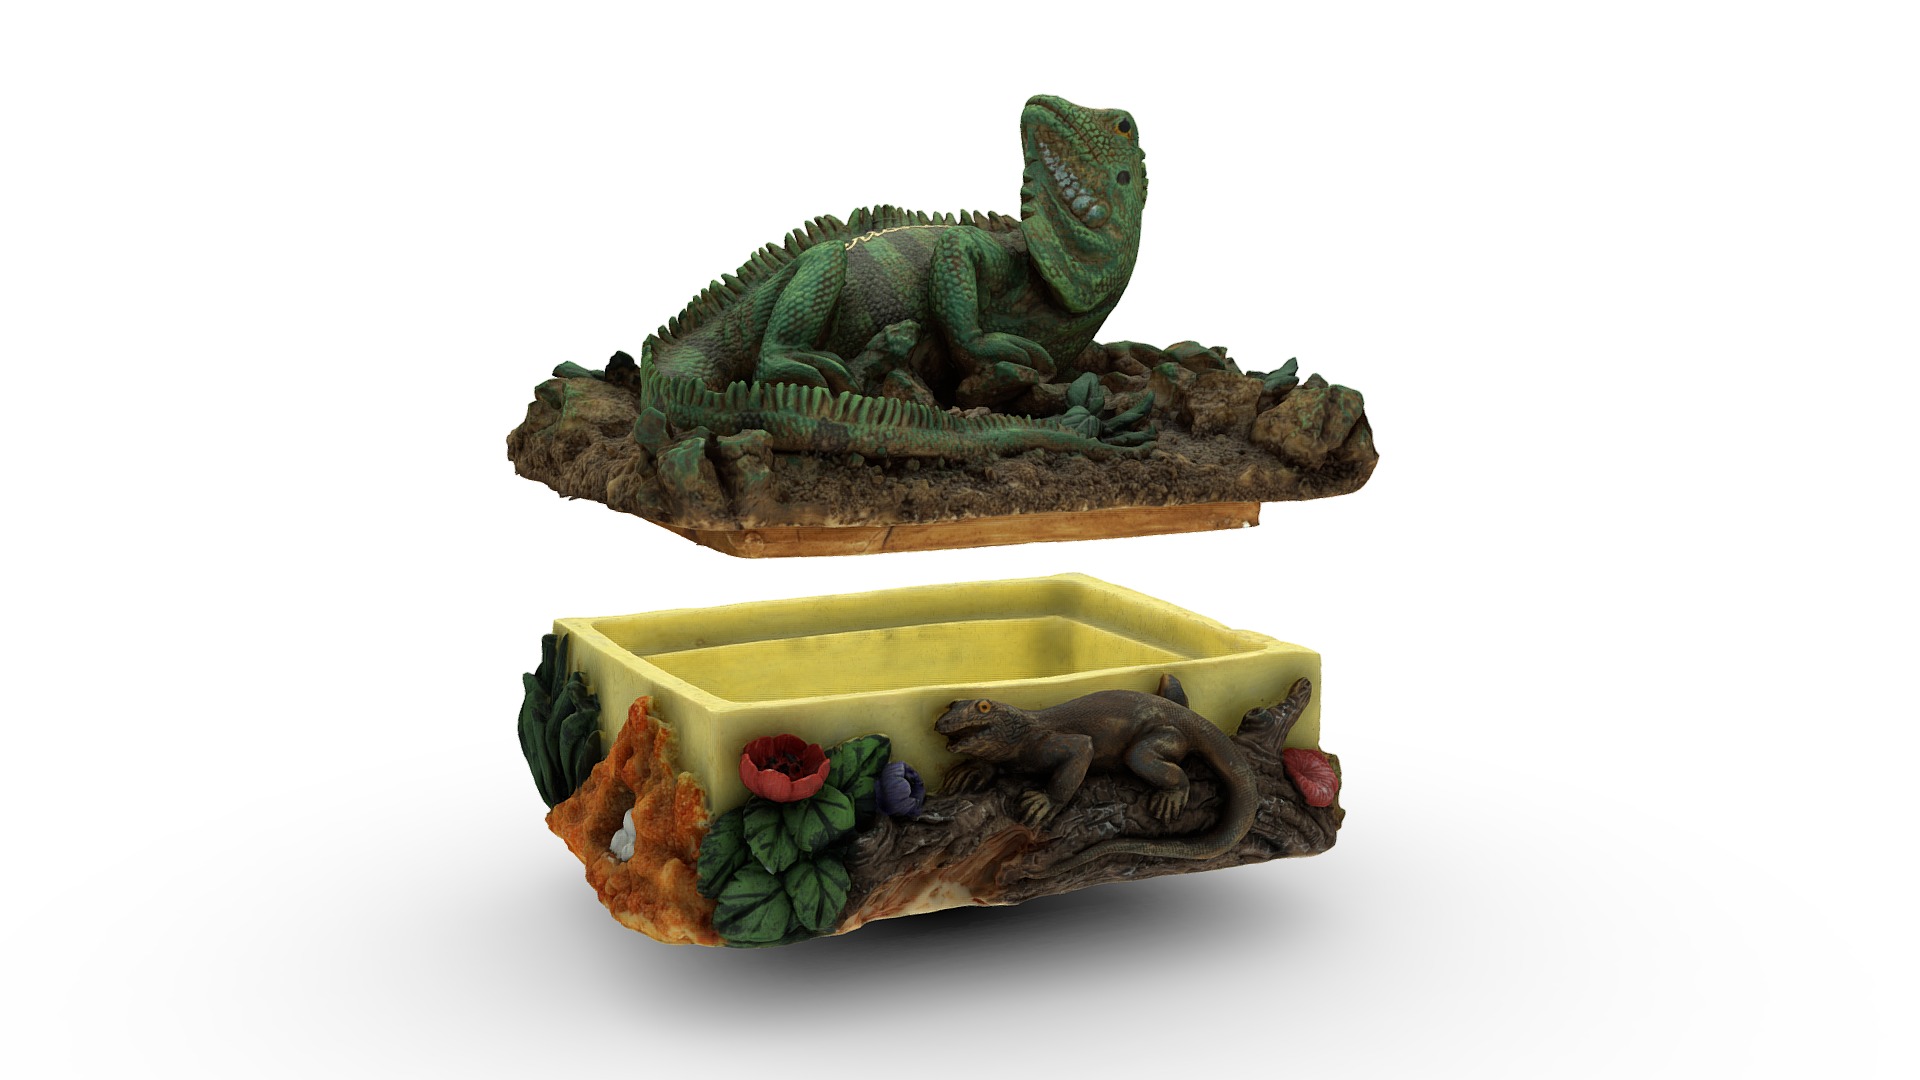 3D model Puerto Rico souvenir box, top and bottom - This is a 3D model of the Puerto Rico souvenir box, top and bottom. The 3D model is about a green toy dinosaur.